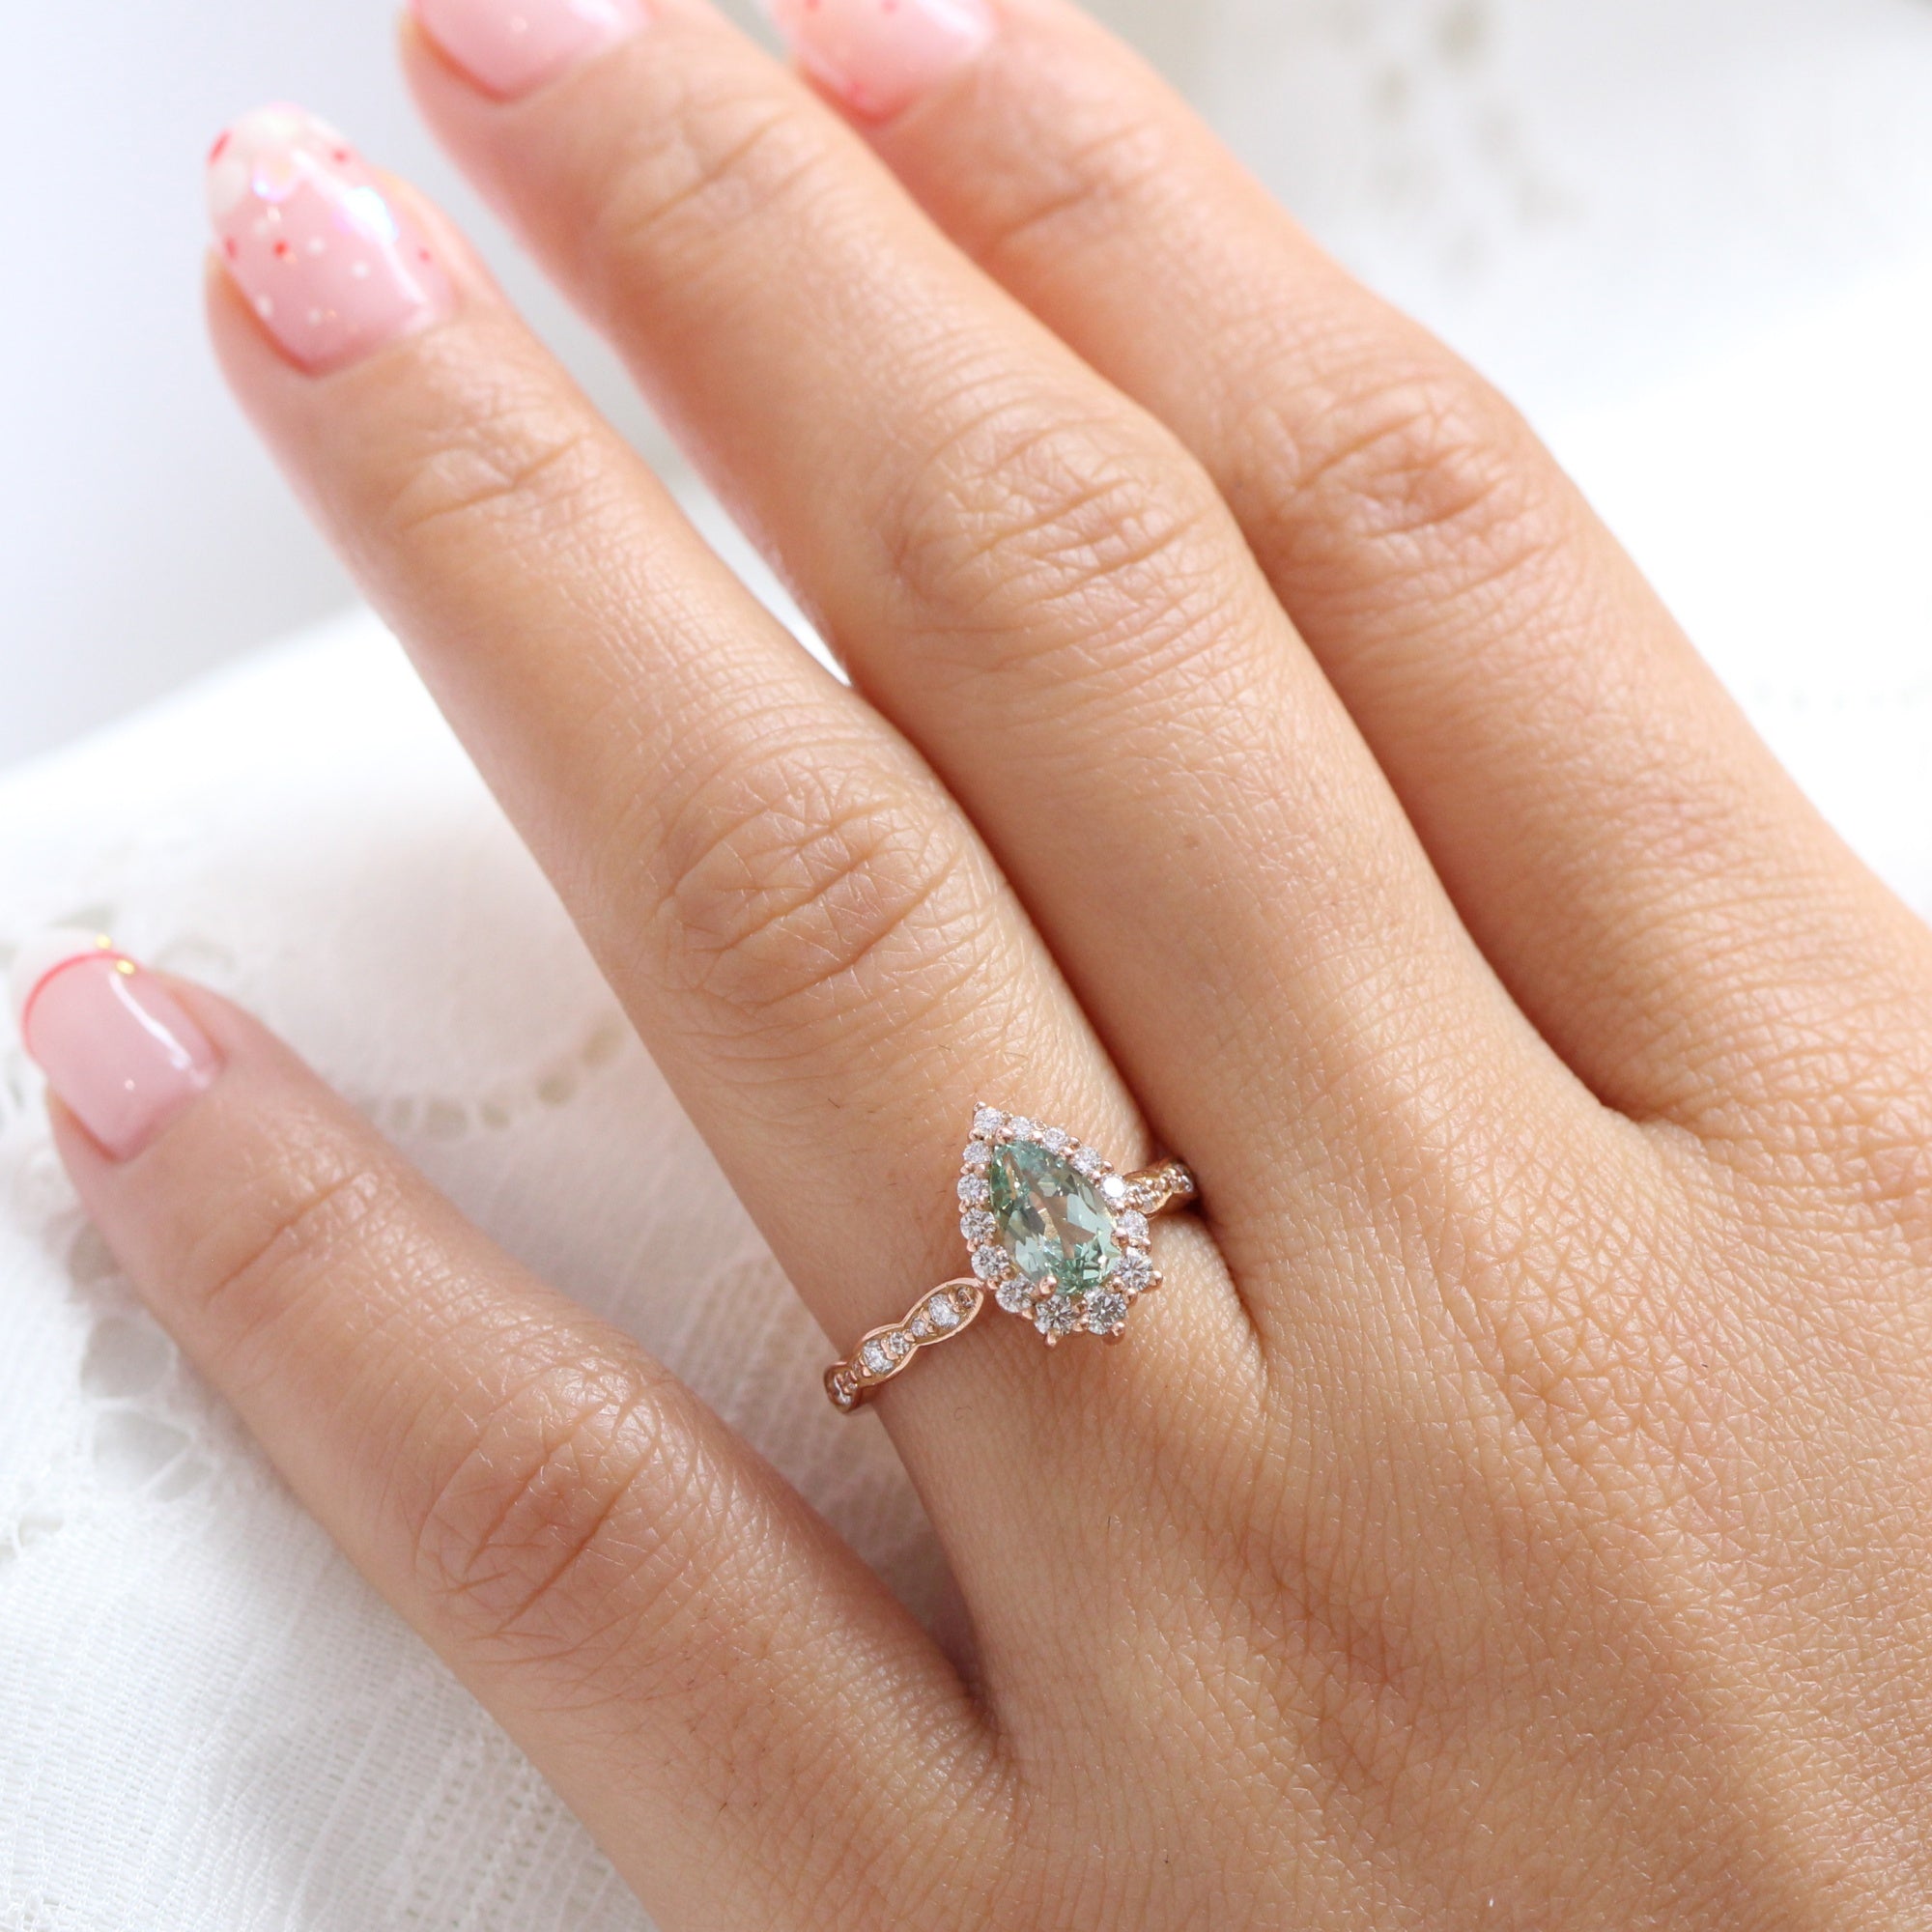 Pear Sea-foam Green Sapphire Ring in 14k Rose Gold Tiara Halo Diamond, Size 6.25